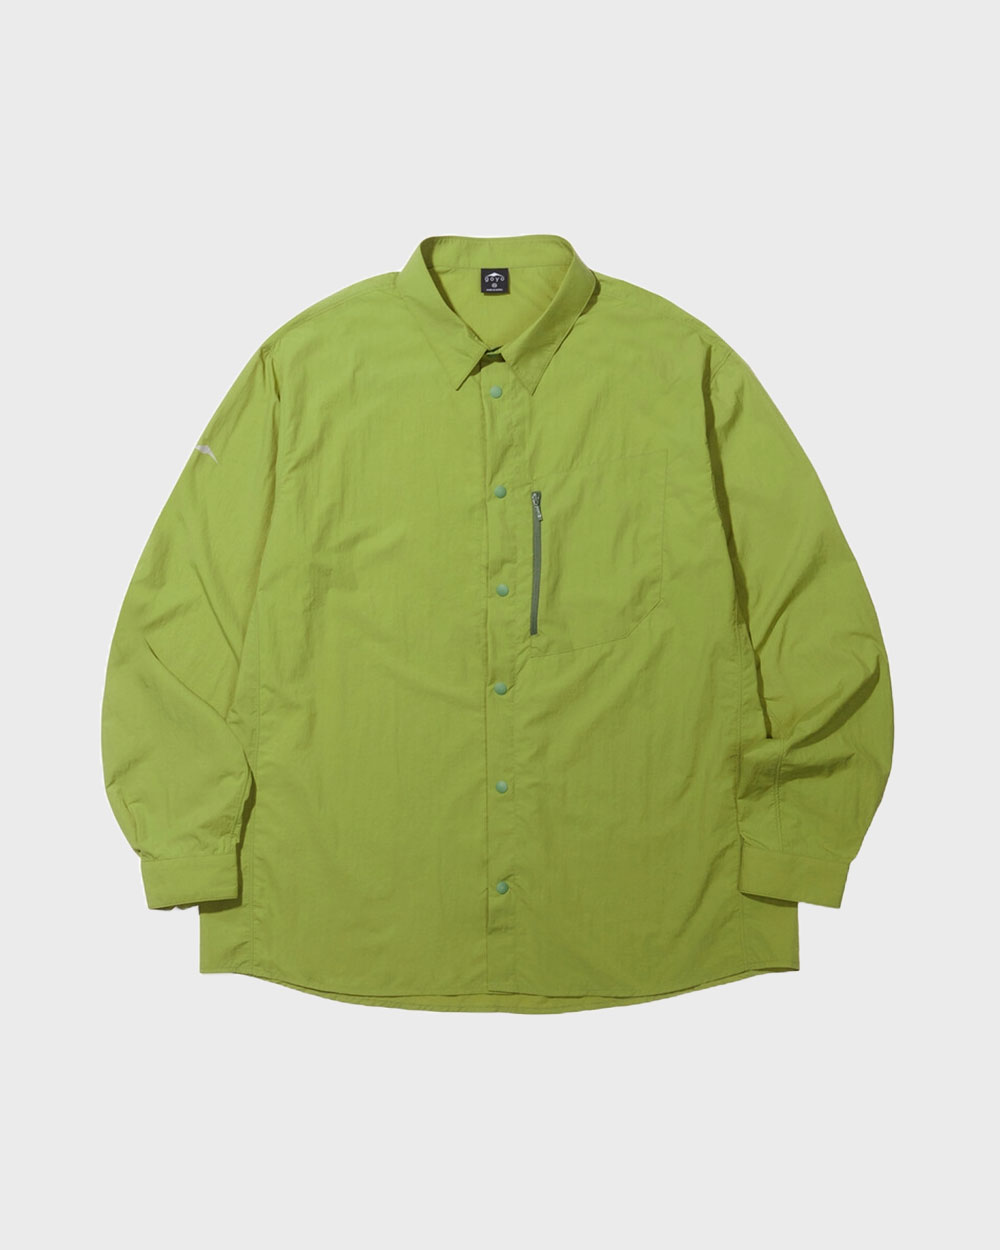 Light Air Shirts (Avocado Green)